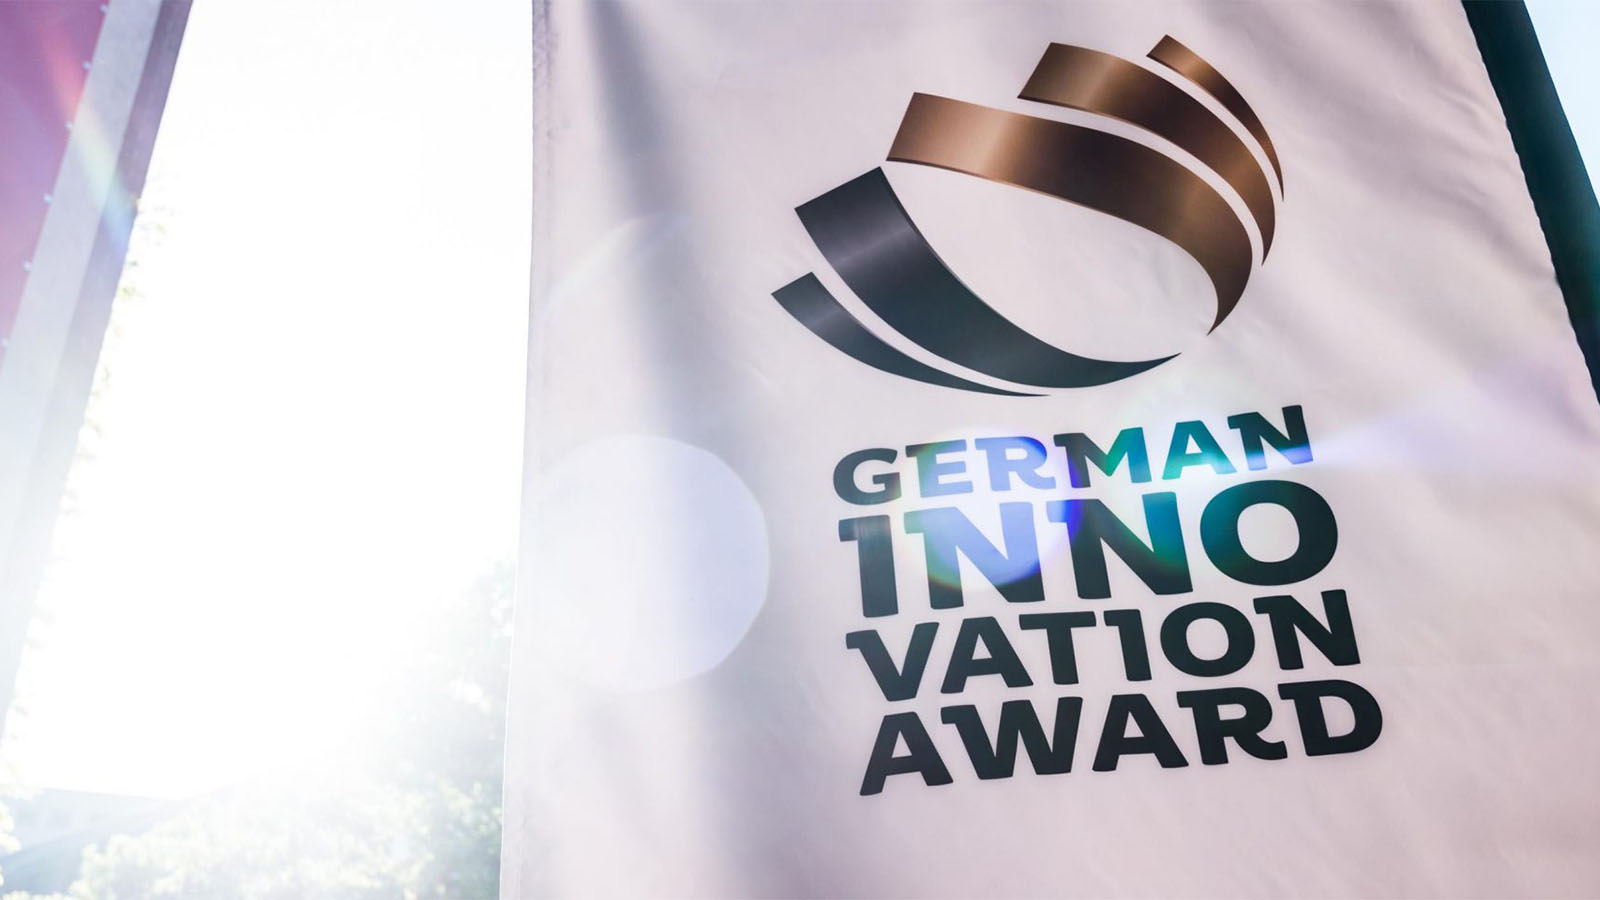 German Innovation Award for “Organ as a Service”